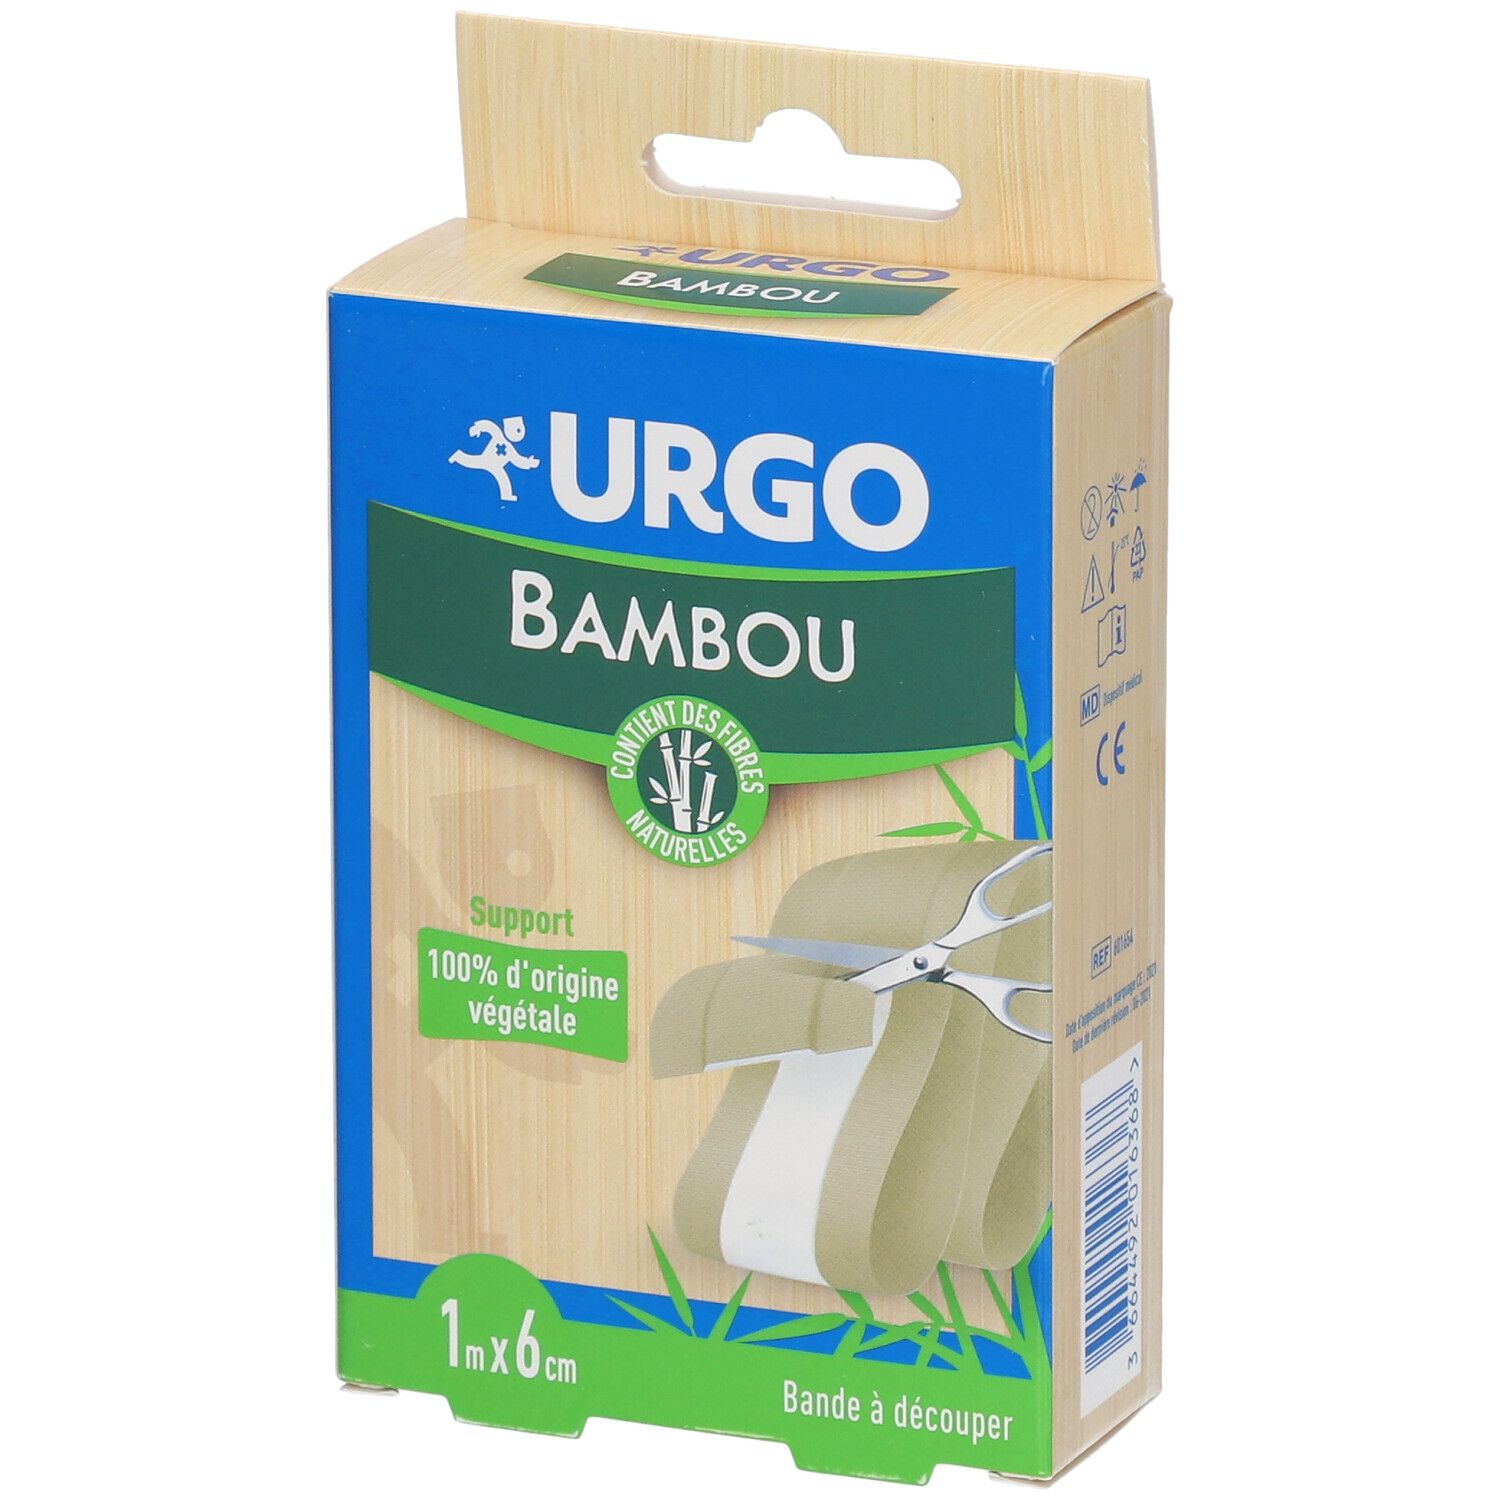 Urgo Bambou Pansement bande 1 m x 6 cm